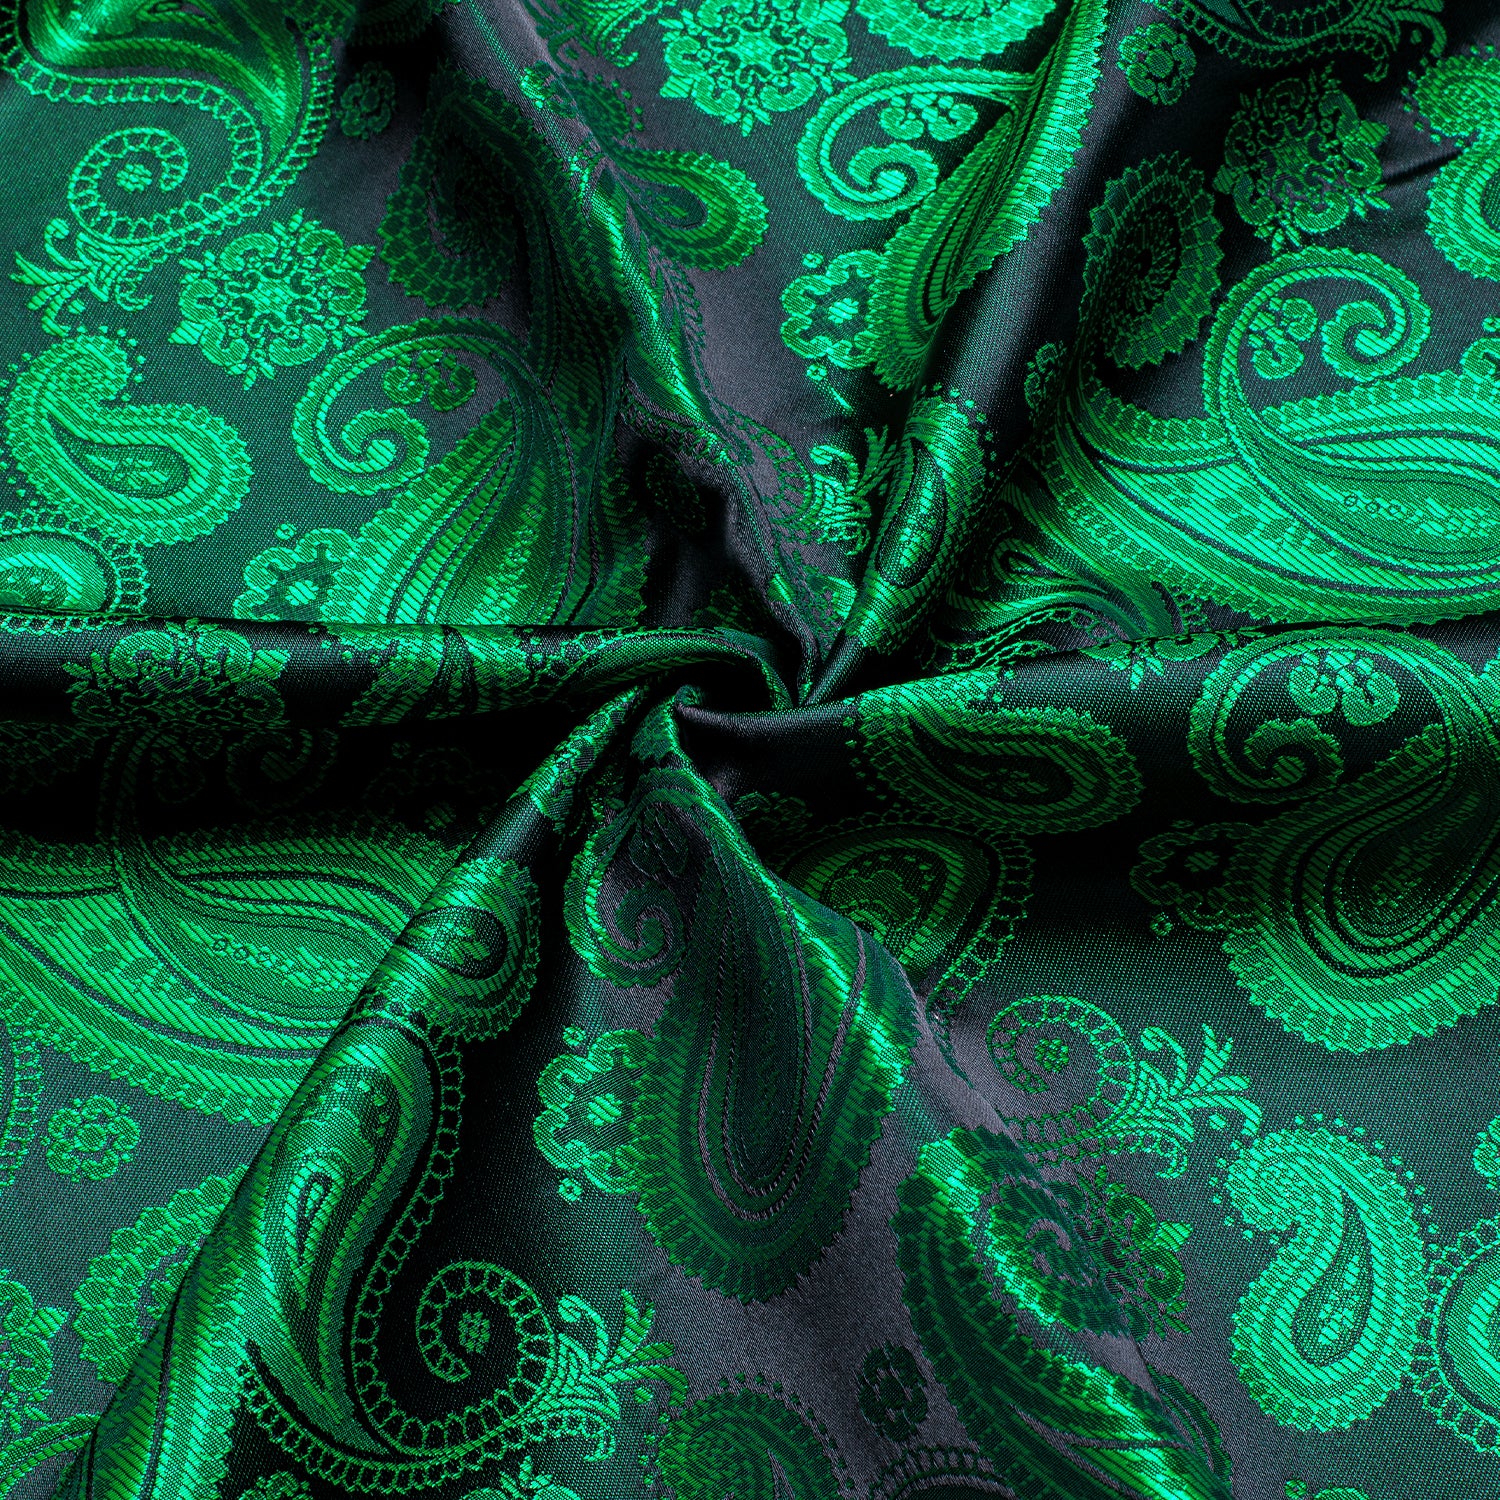 Green Black Paisley Silk Men's Long Sleeve Shirt Casual